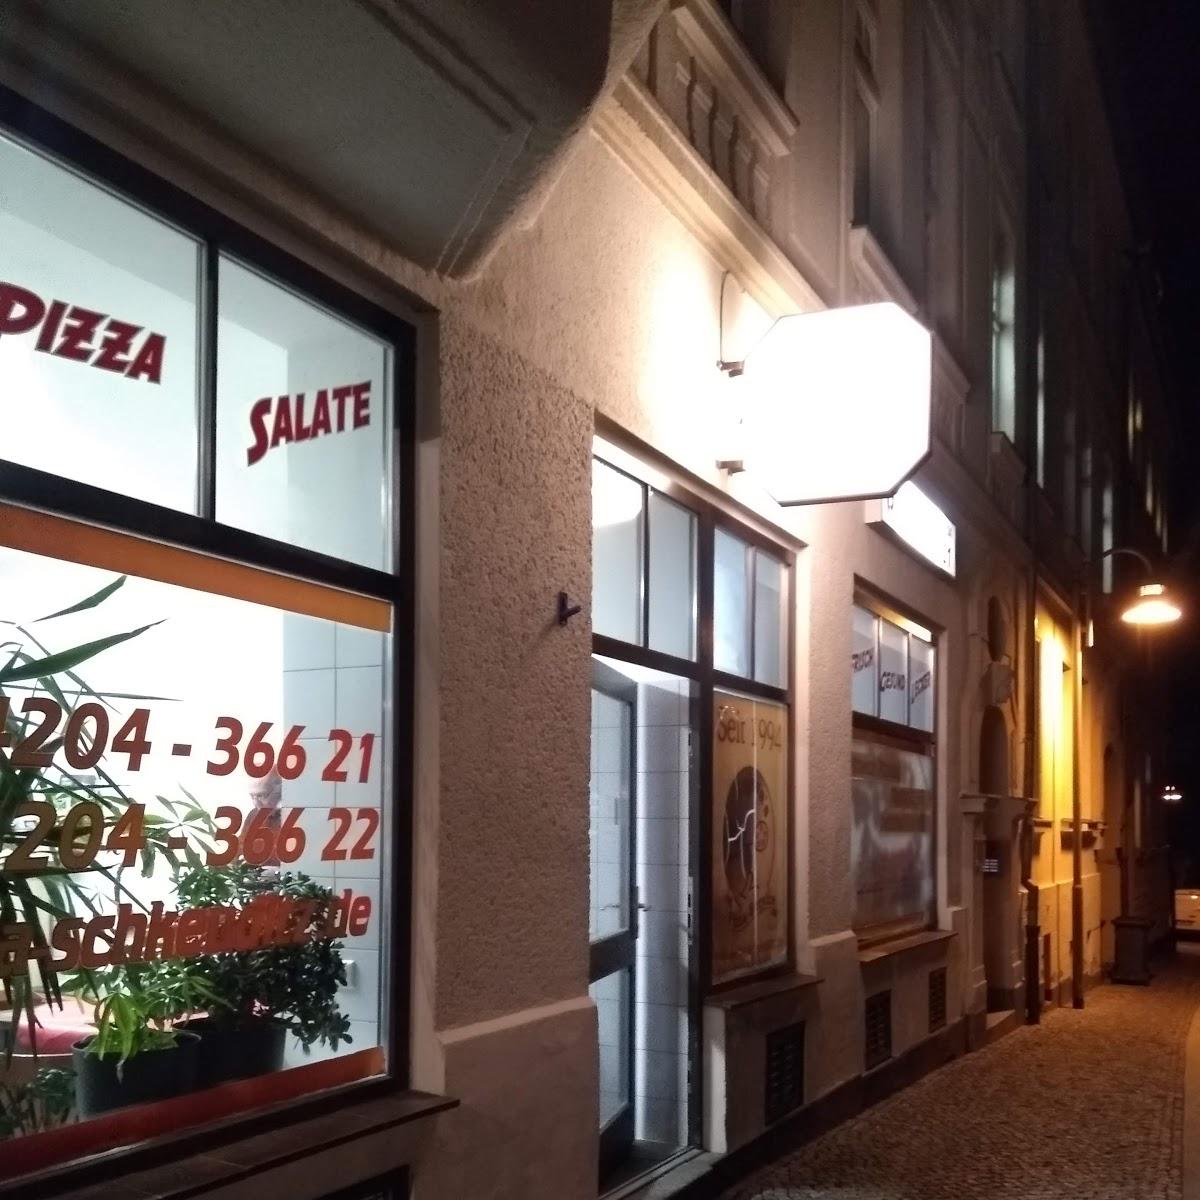 Restaurant "Bajwa’s" in Schkeuditz